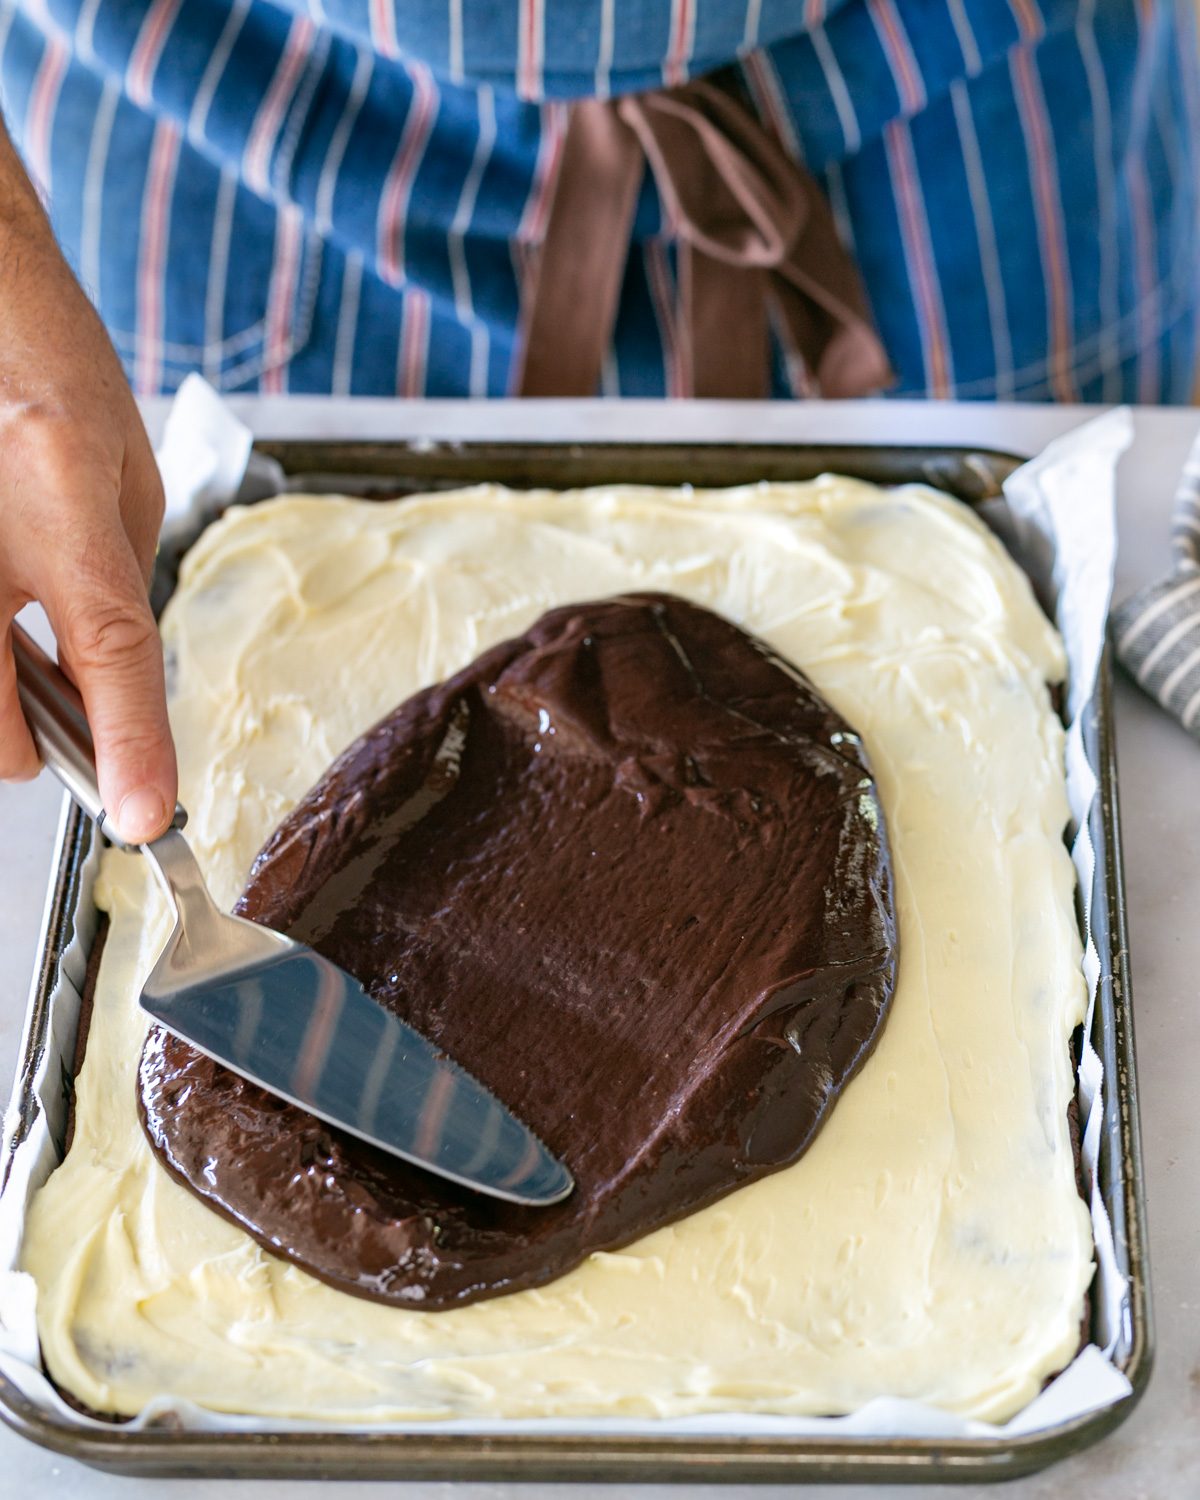 Chocolate glaze spread over cream cheese layer